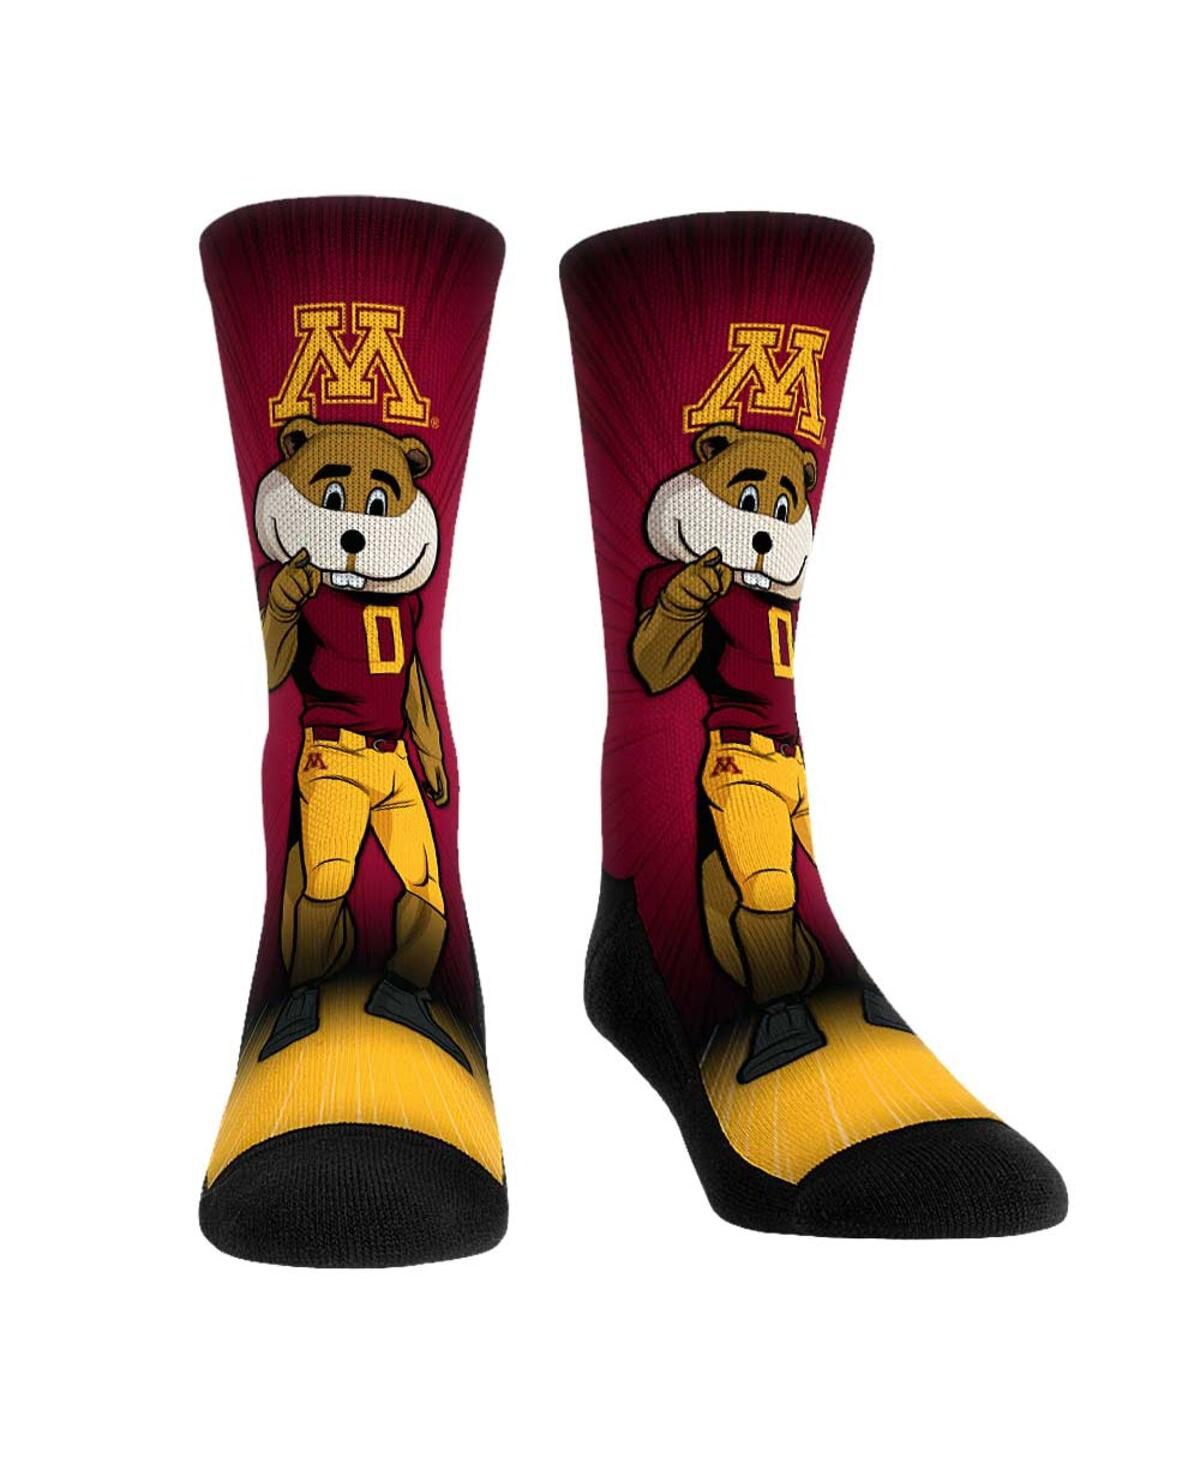 Men's and Women's Rock 'Em Socks Minnesota Golden Gophers Mascot Pump Up Crew Socks - Multi